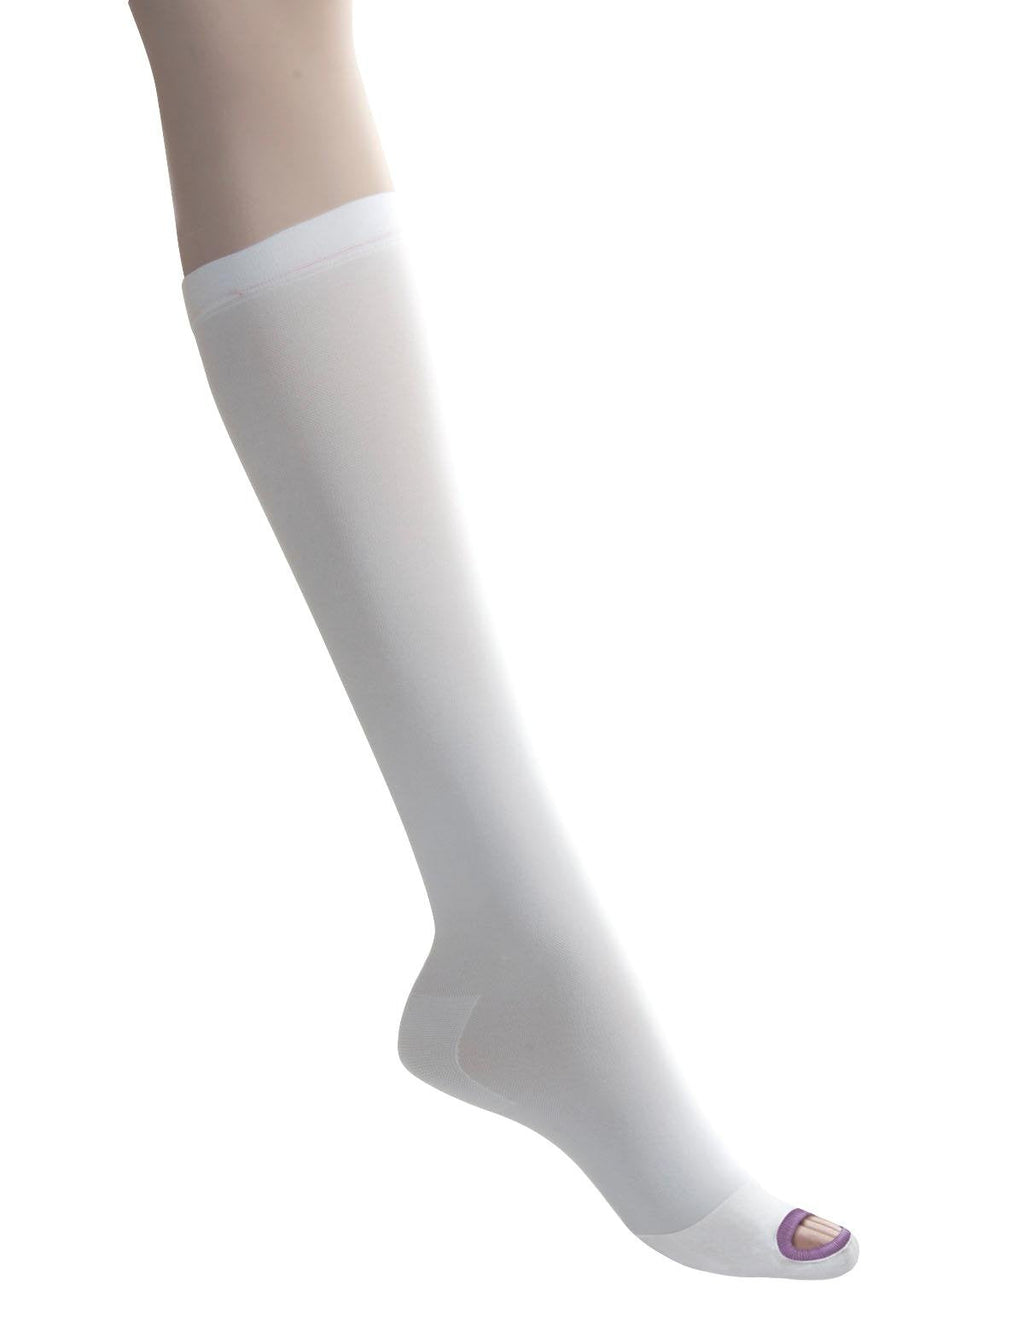 [Australia] - Medline High- Knee Stocking, Anti-Embolism, K-L, Regular, 2XL, White (1 Pair) 